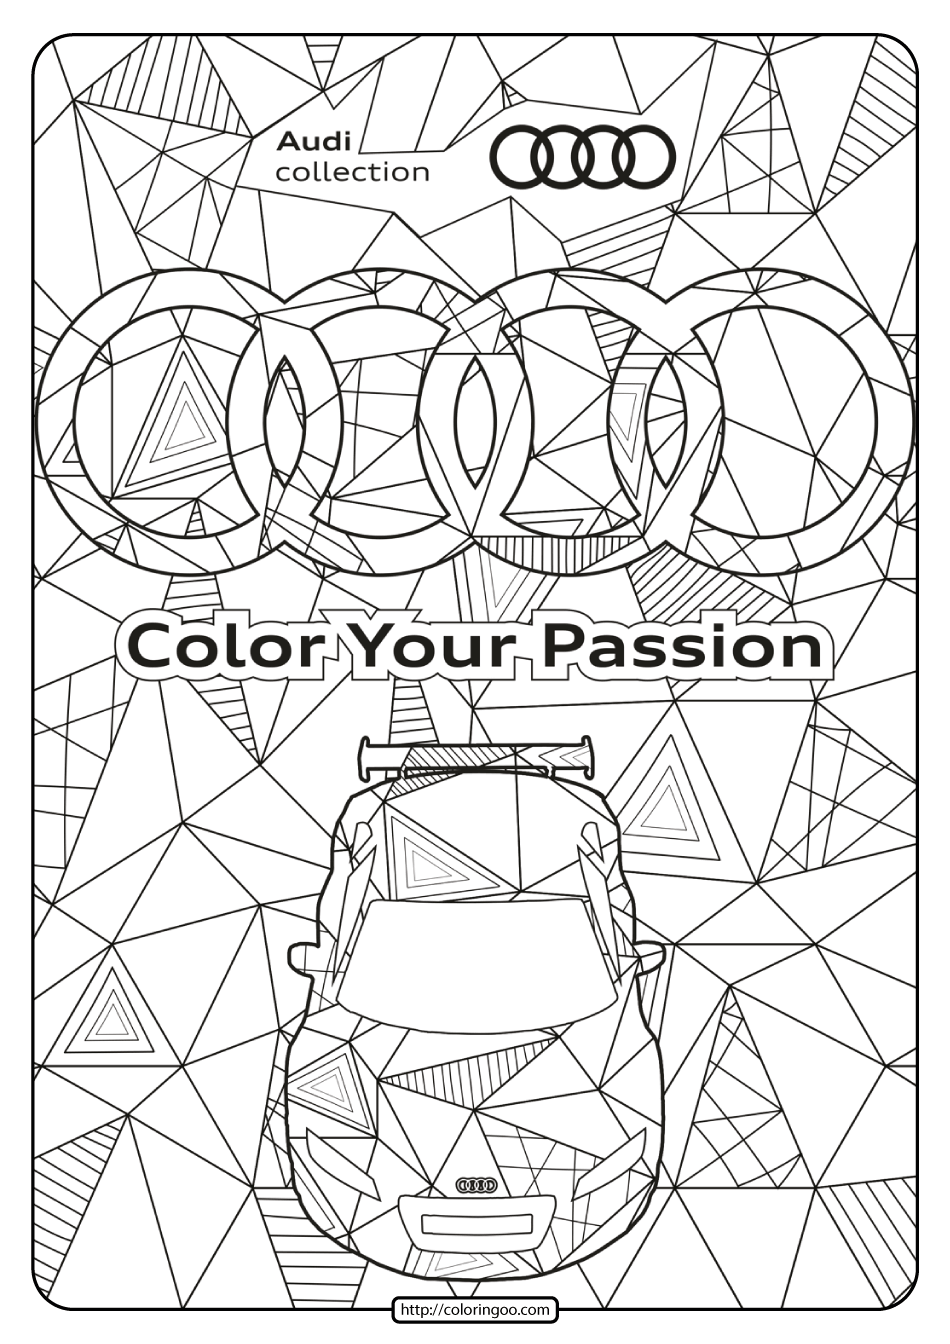 printable audi coloring book page 01